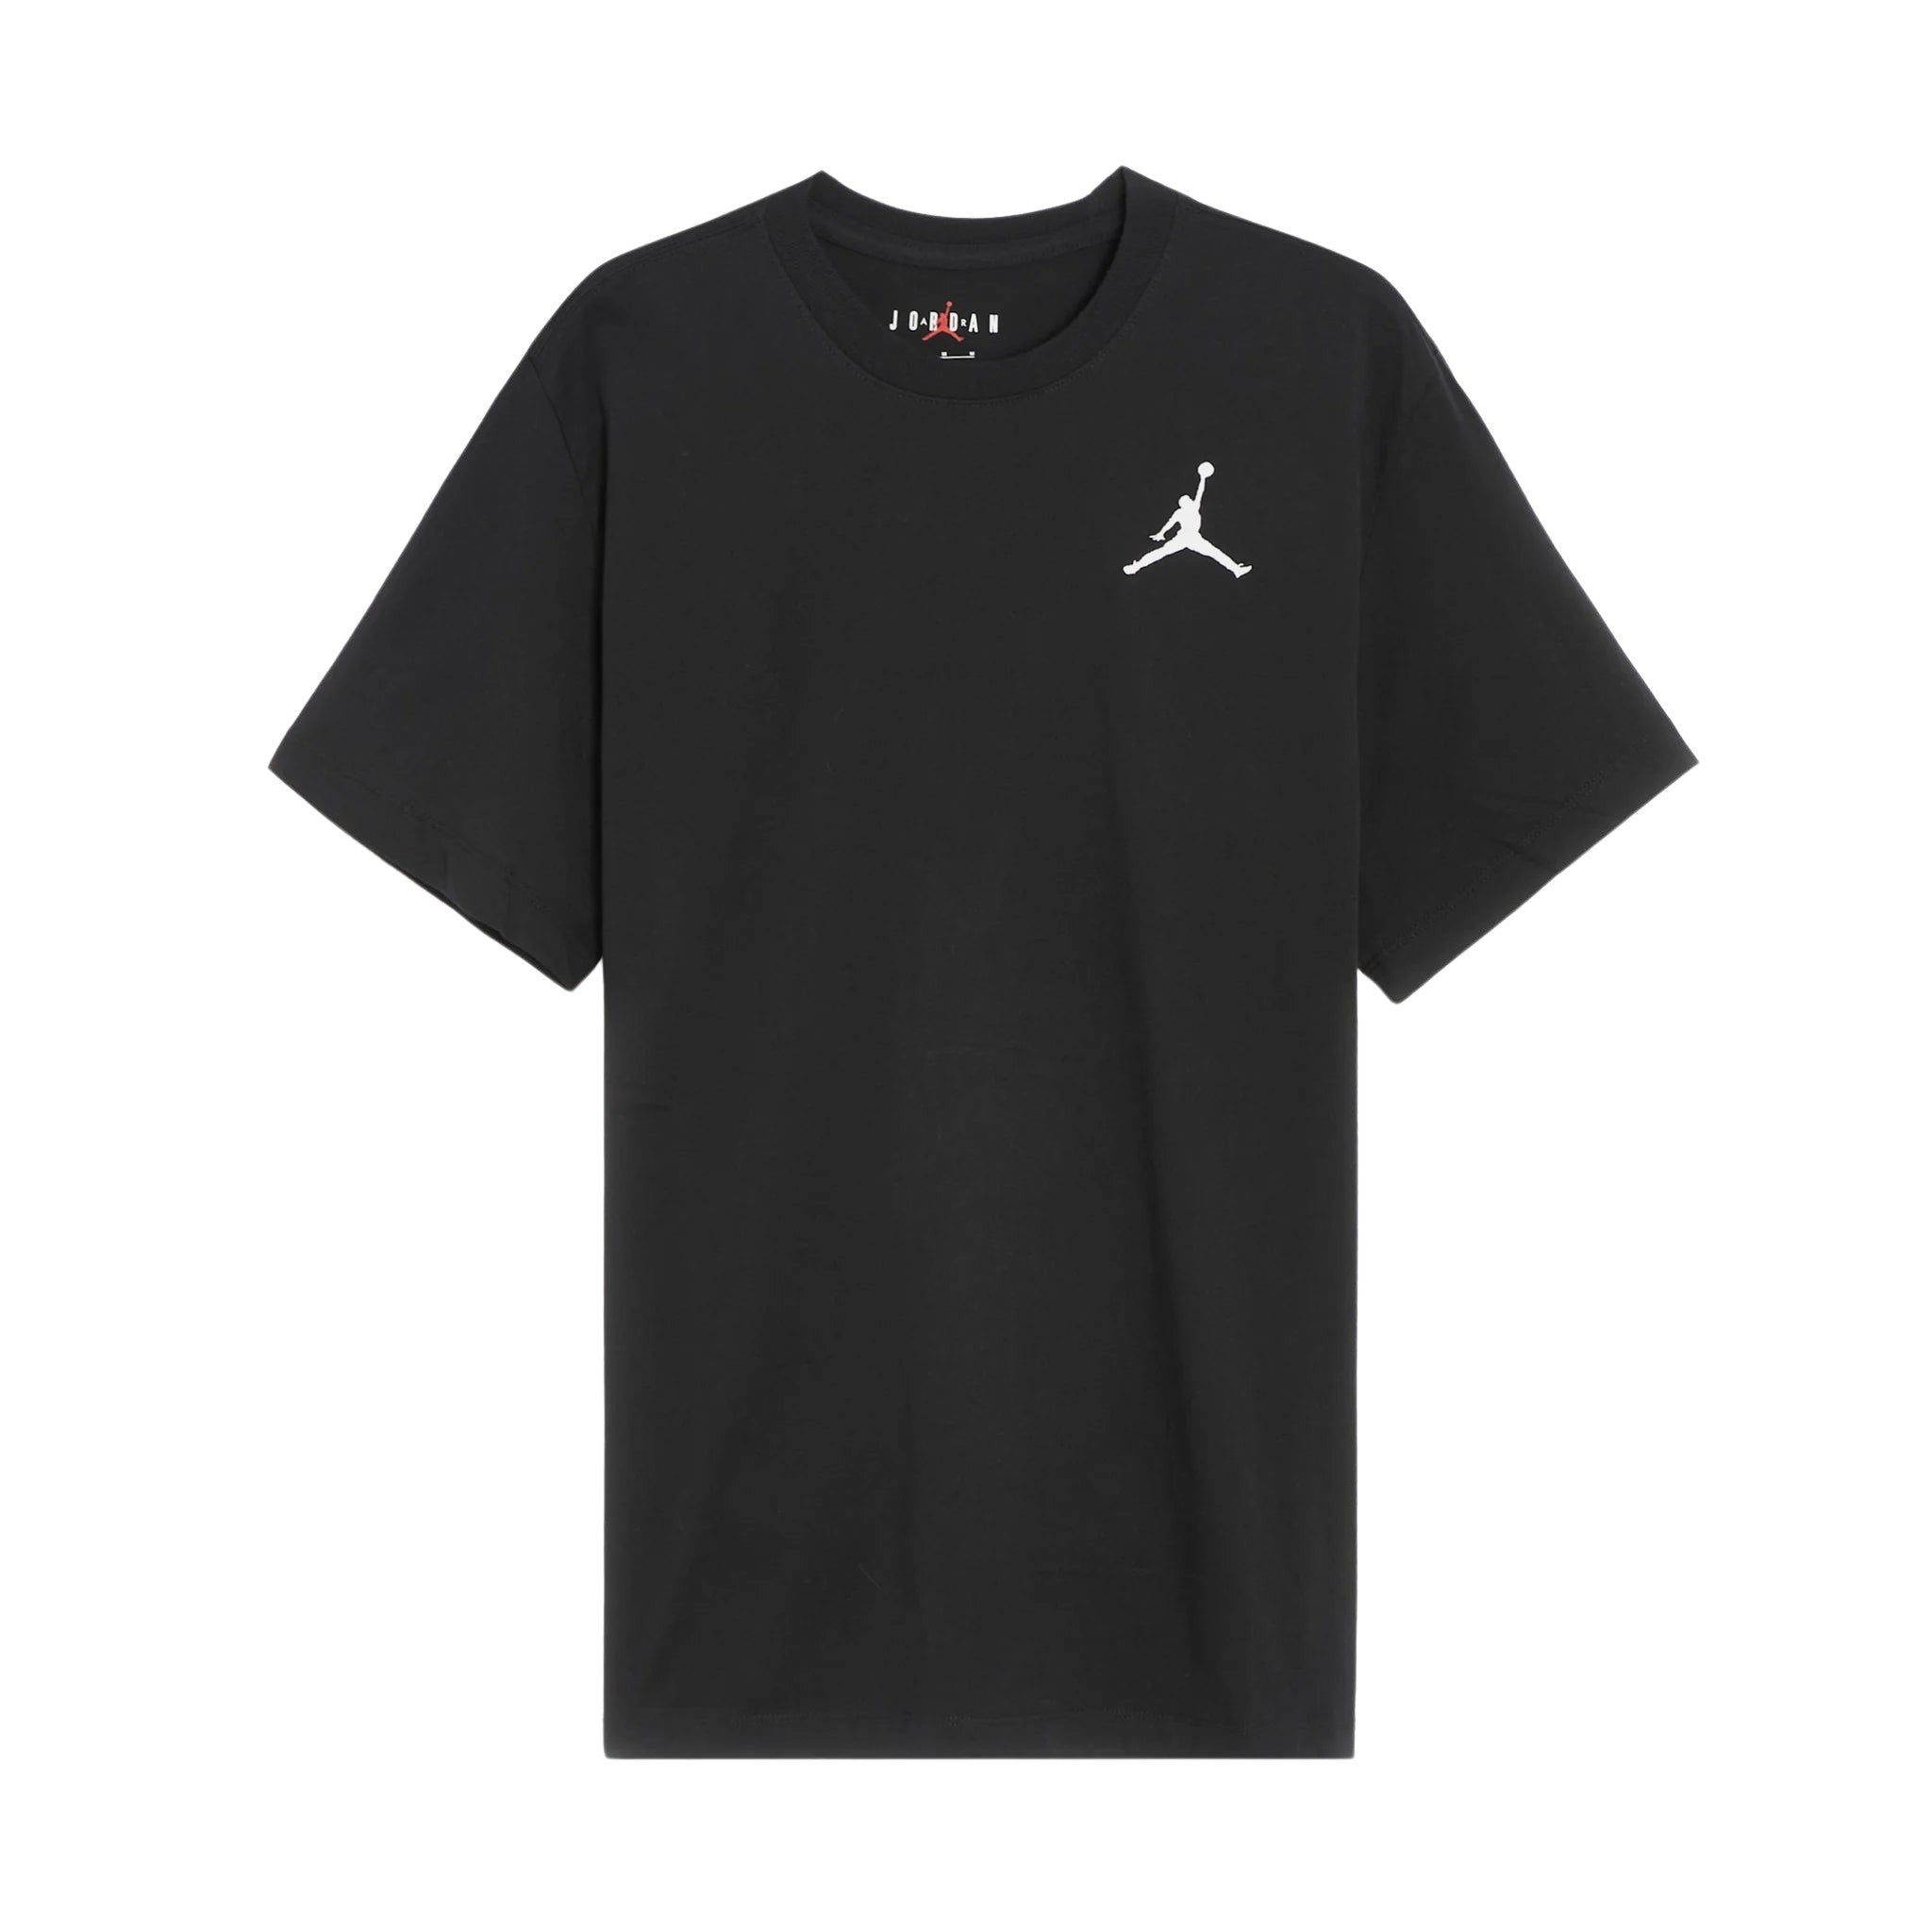 Jordan Jumpman Embroidered T-Shirt